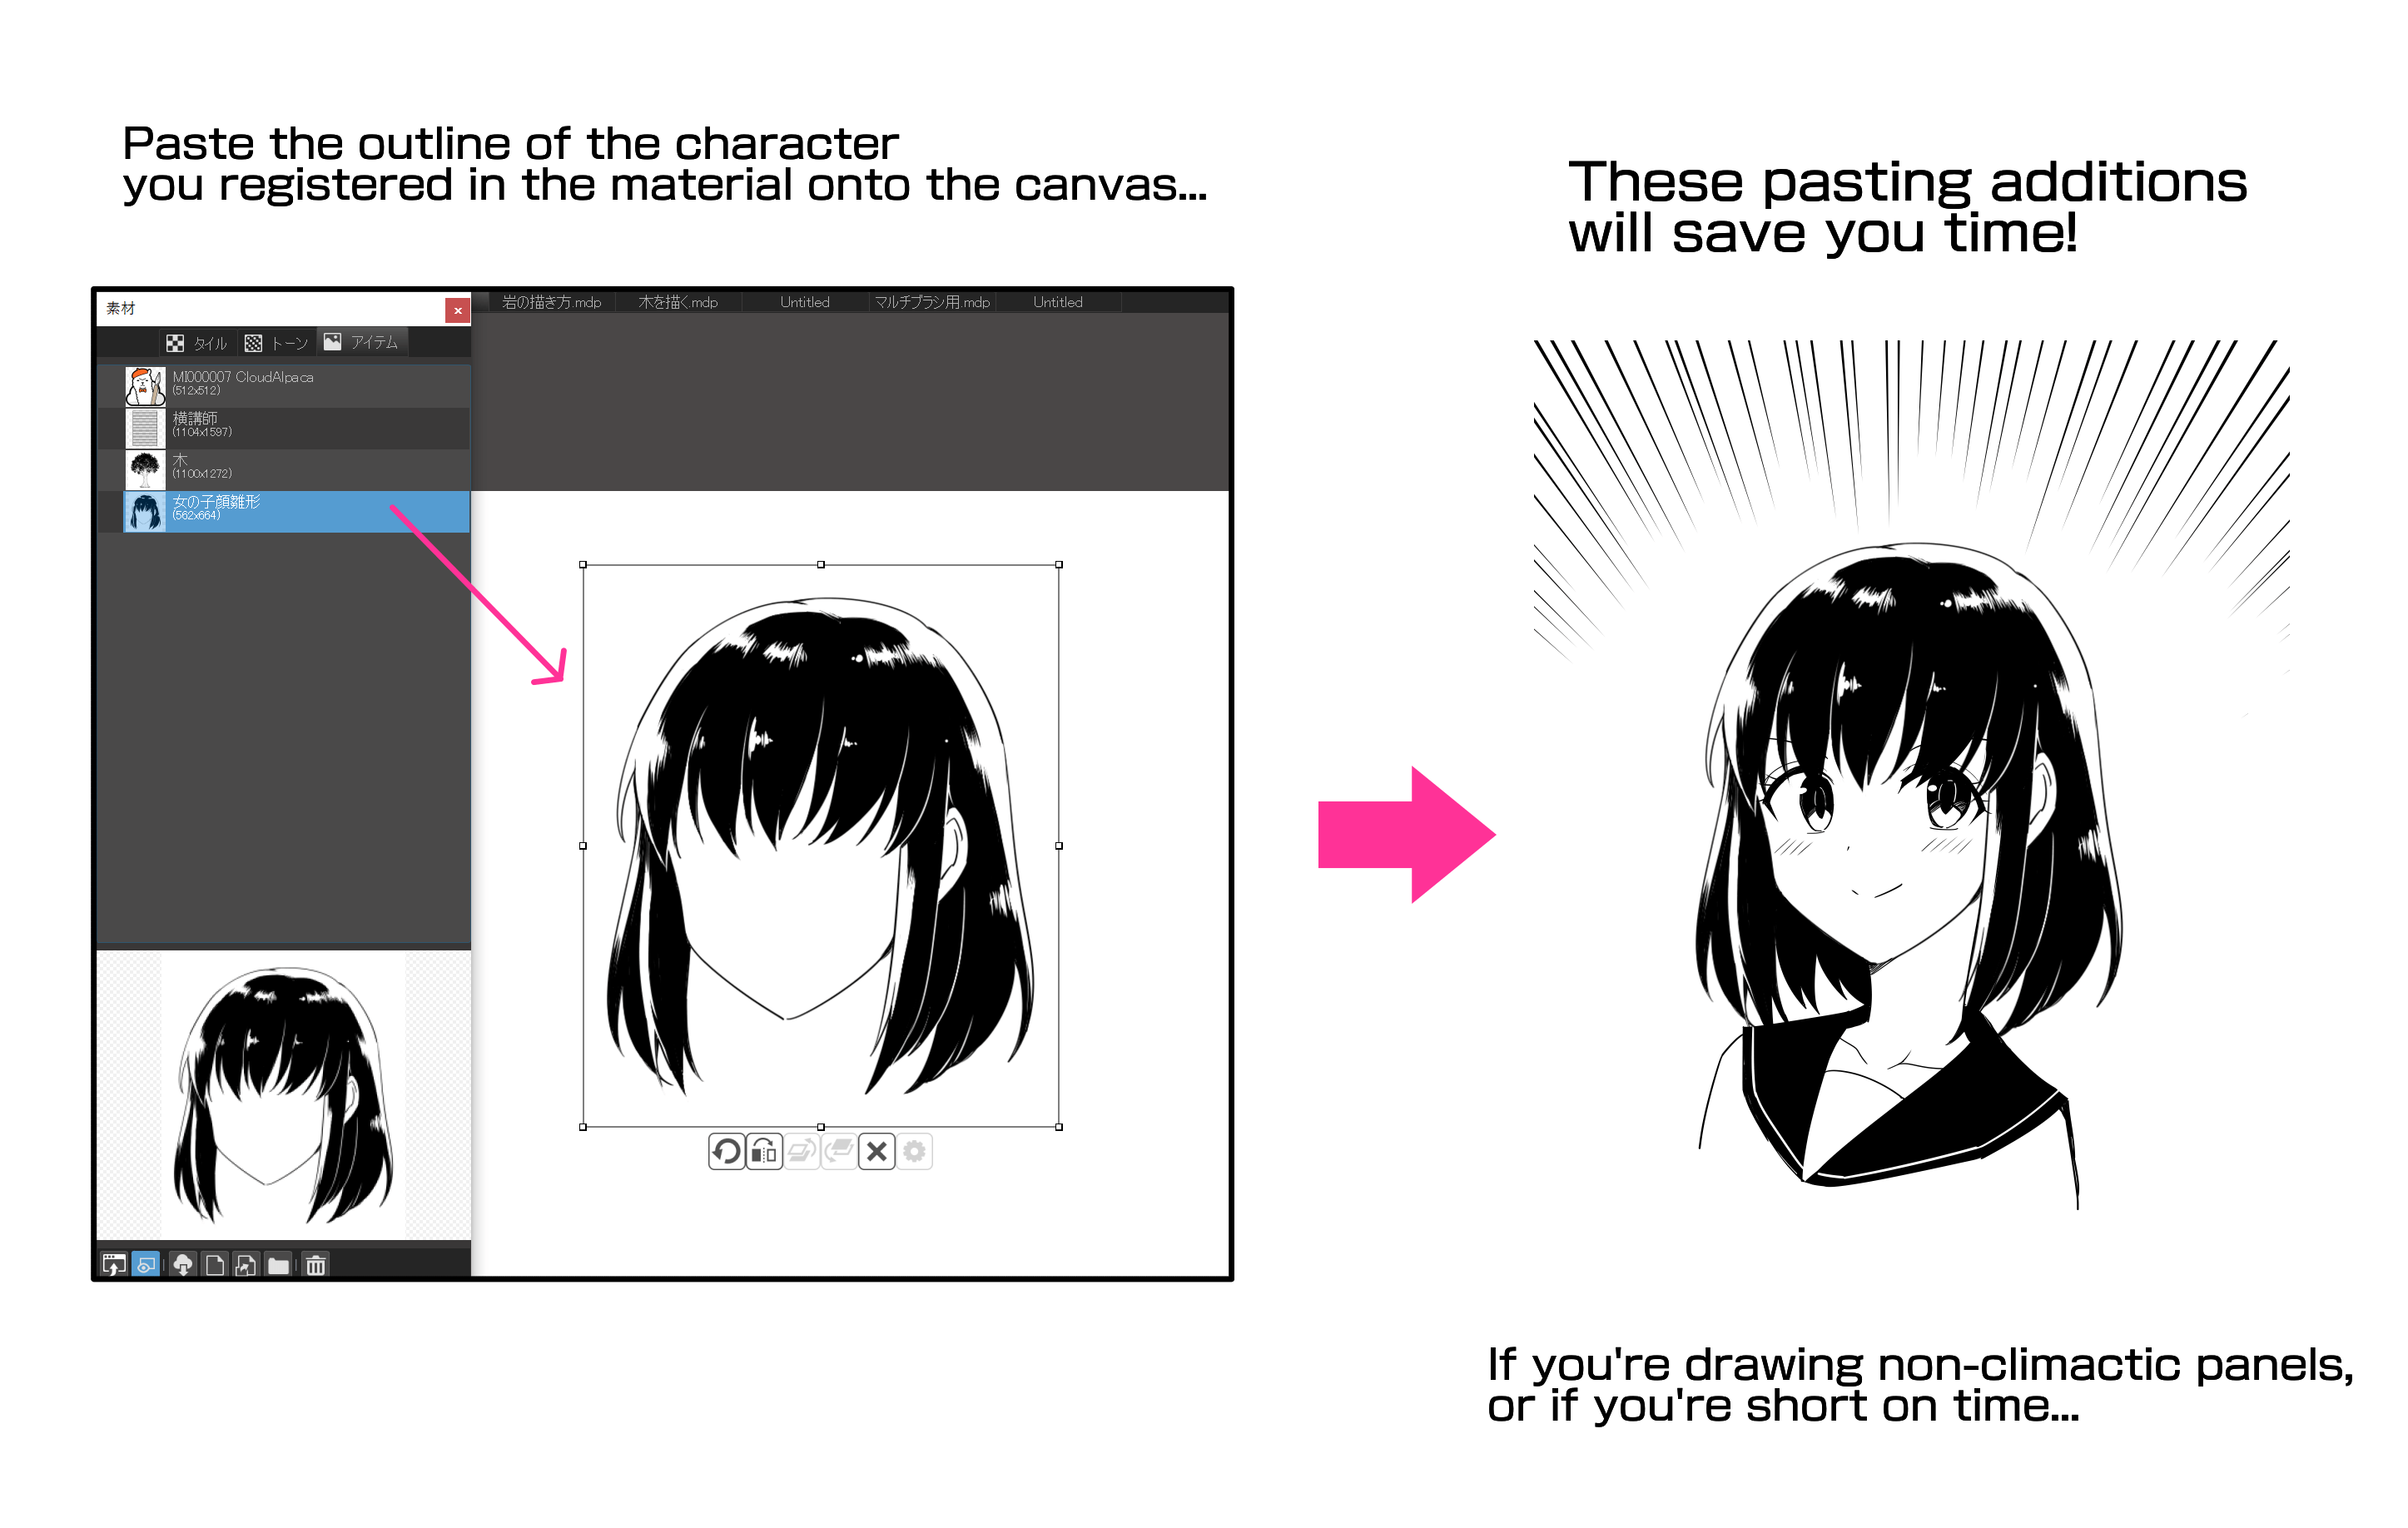 Para iniciantes】Poses com armas ～Parte 1～【Making】  MediBang Paint - the  free digital painting and manga creation software